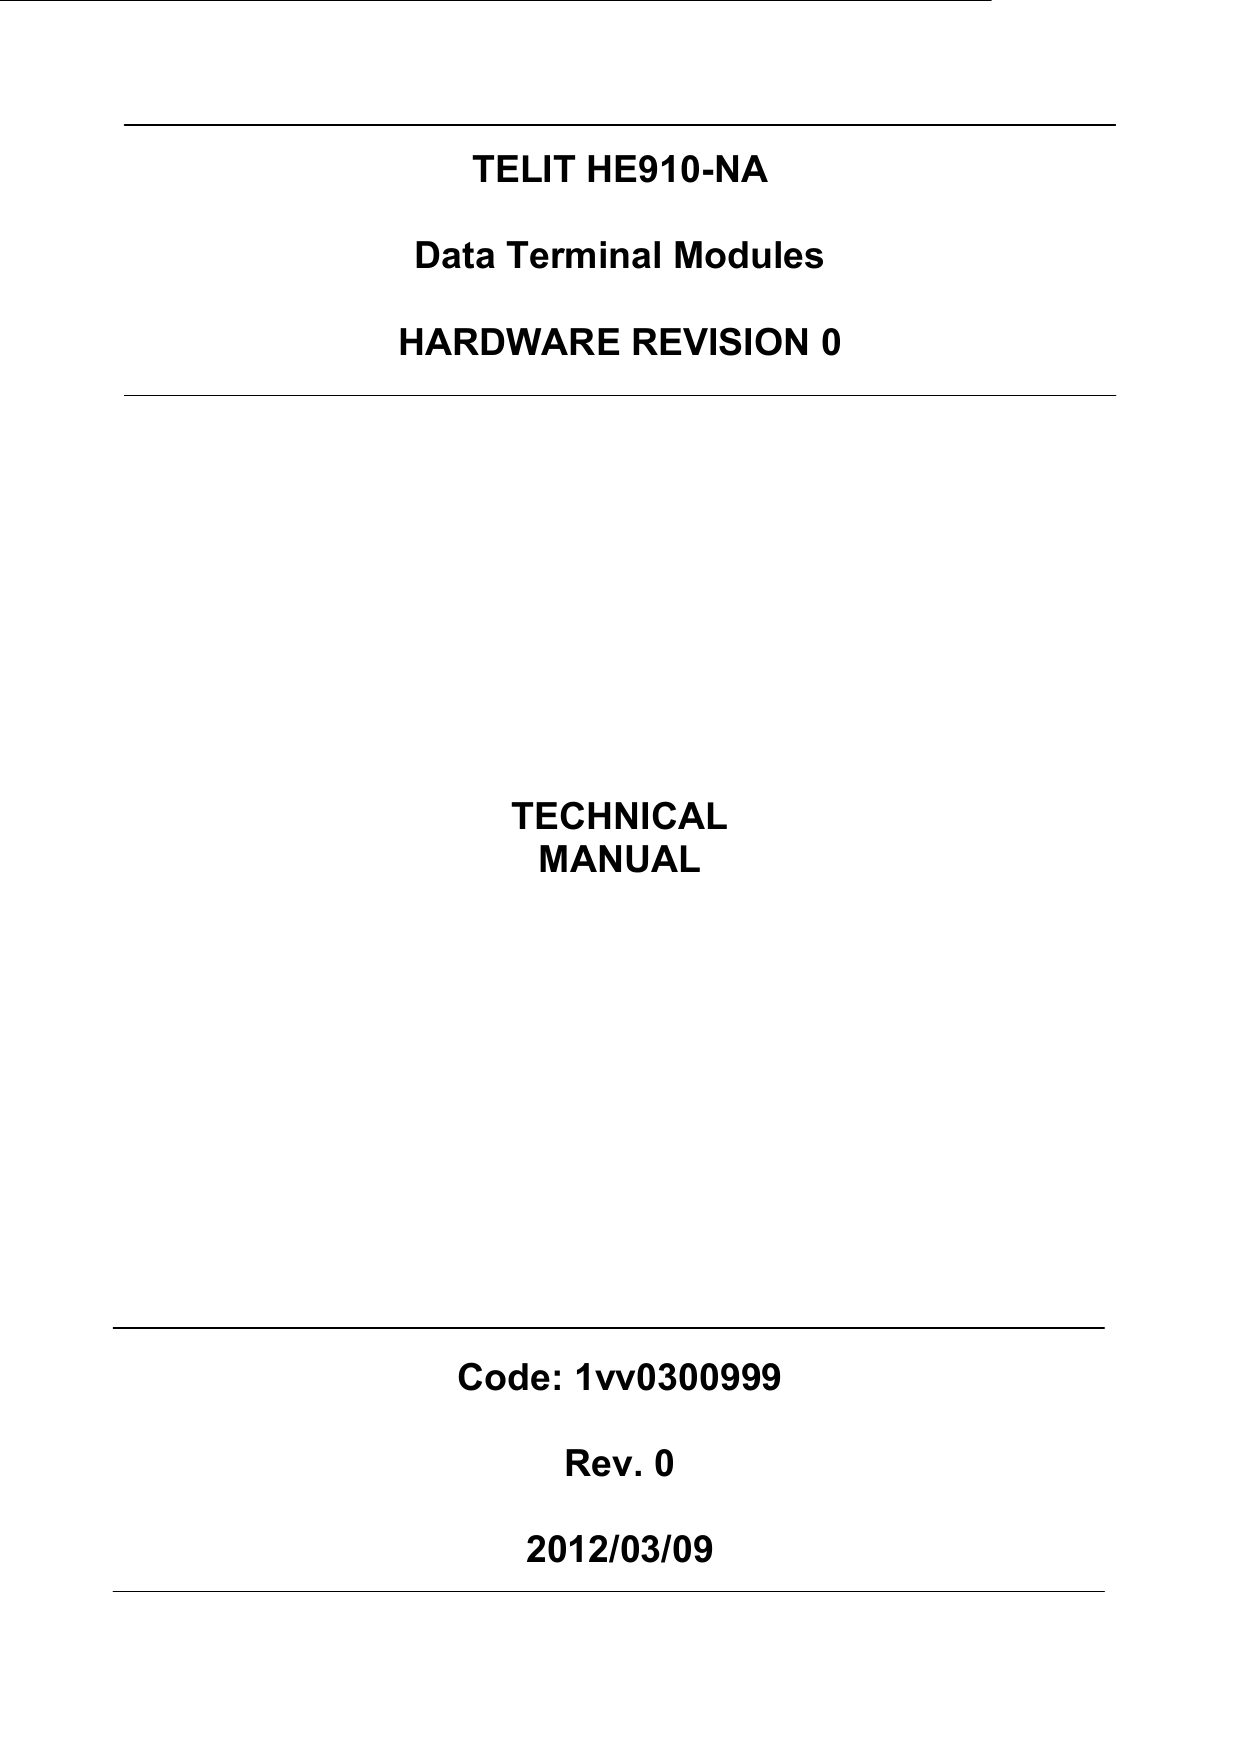  TELIT HE910-NA  Data Terminal Modules  HARDWARE REVISION 0           TECHNICAL MANUAL                     Code: 1vv0300999  Rev. 0  2012/03/09  